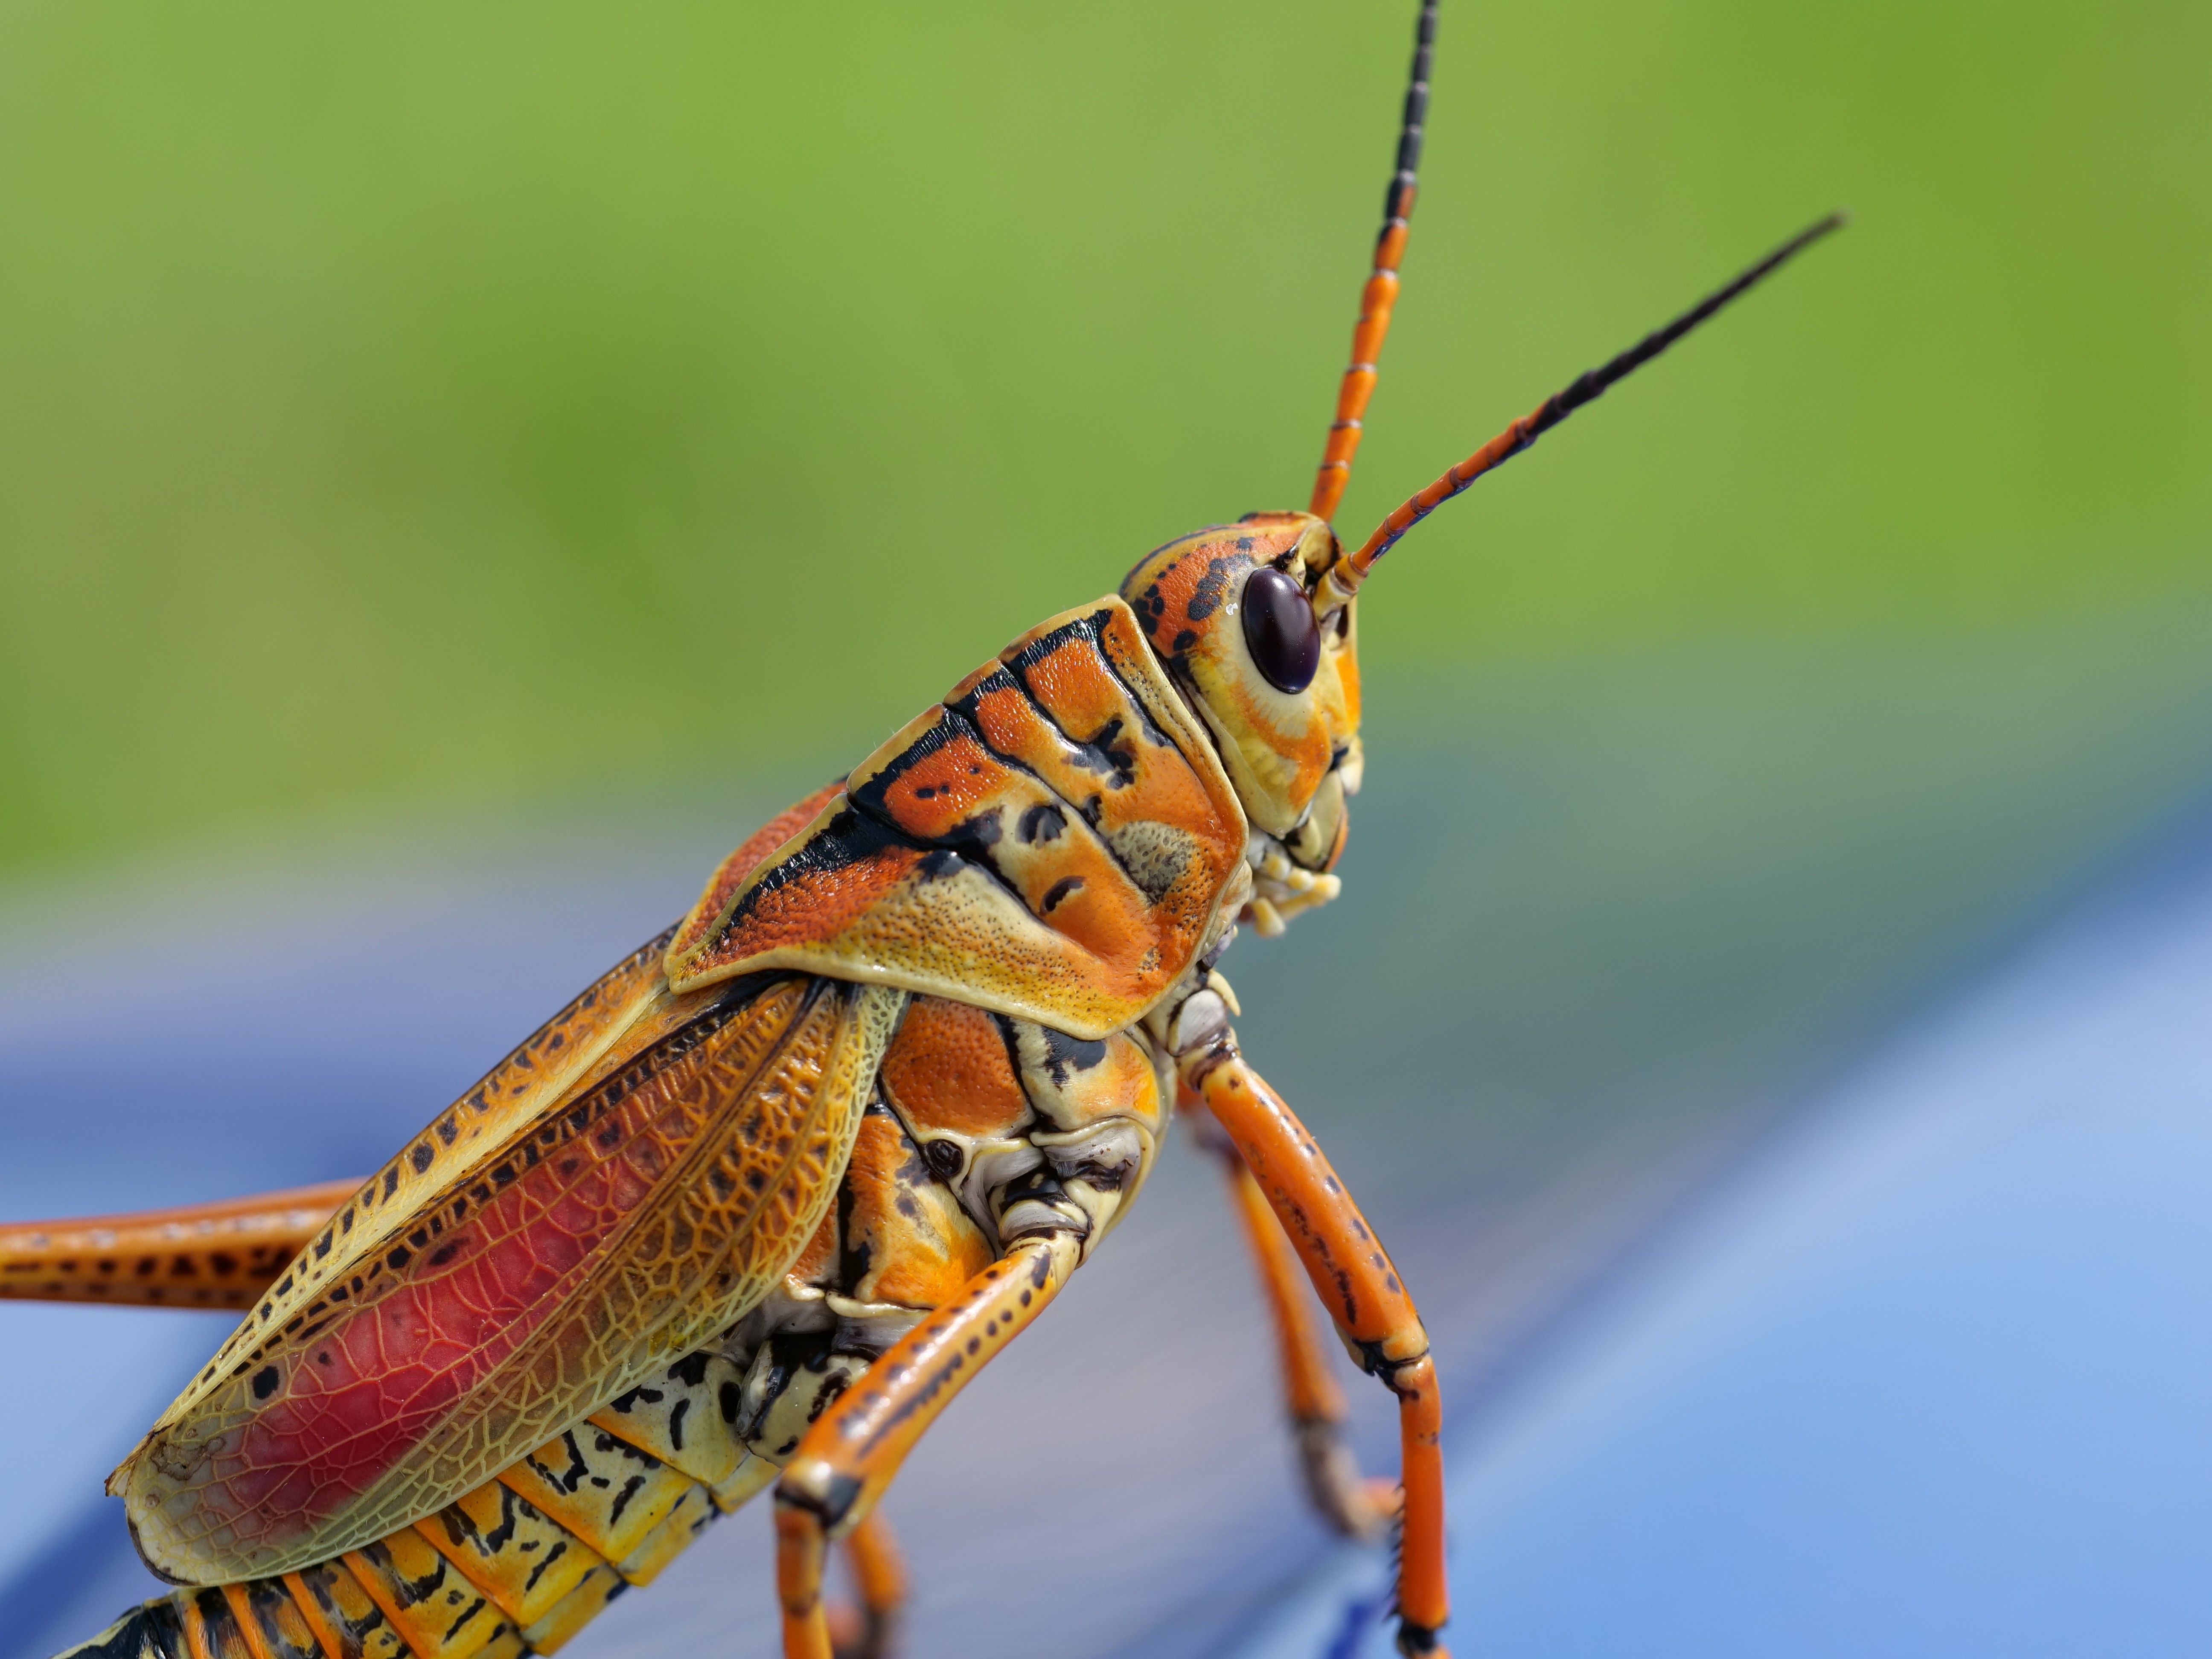 Childhood Shorts – Chapter 8: The Grasshopper Instinct